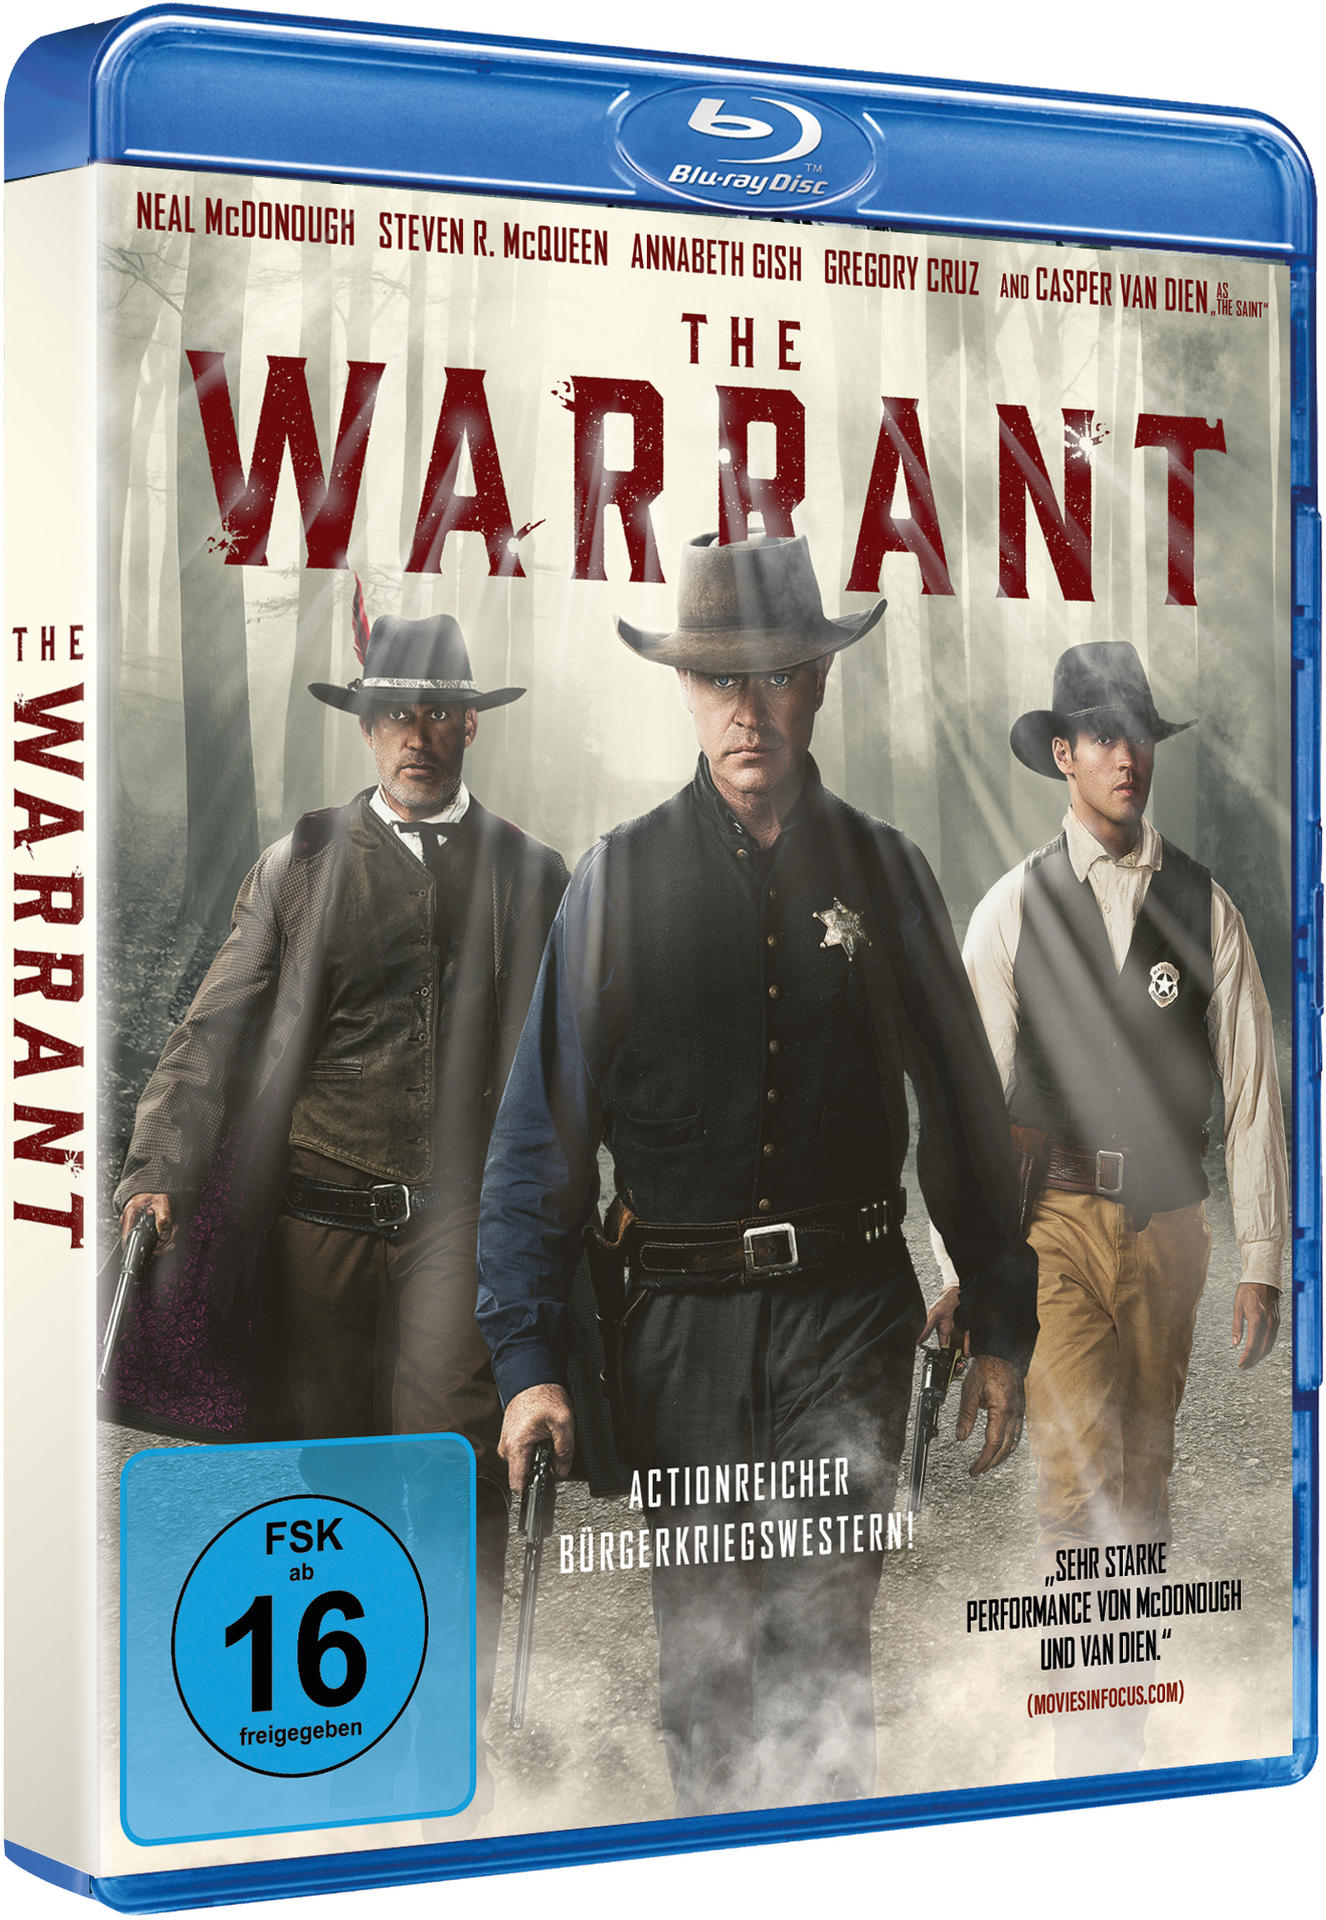 The Blu-ray Warrant